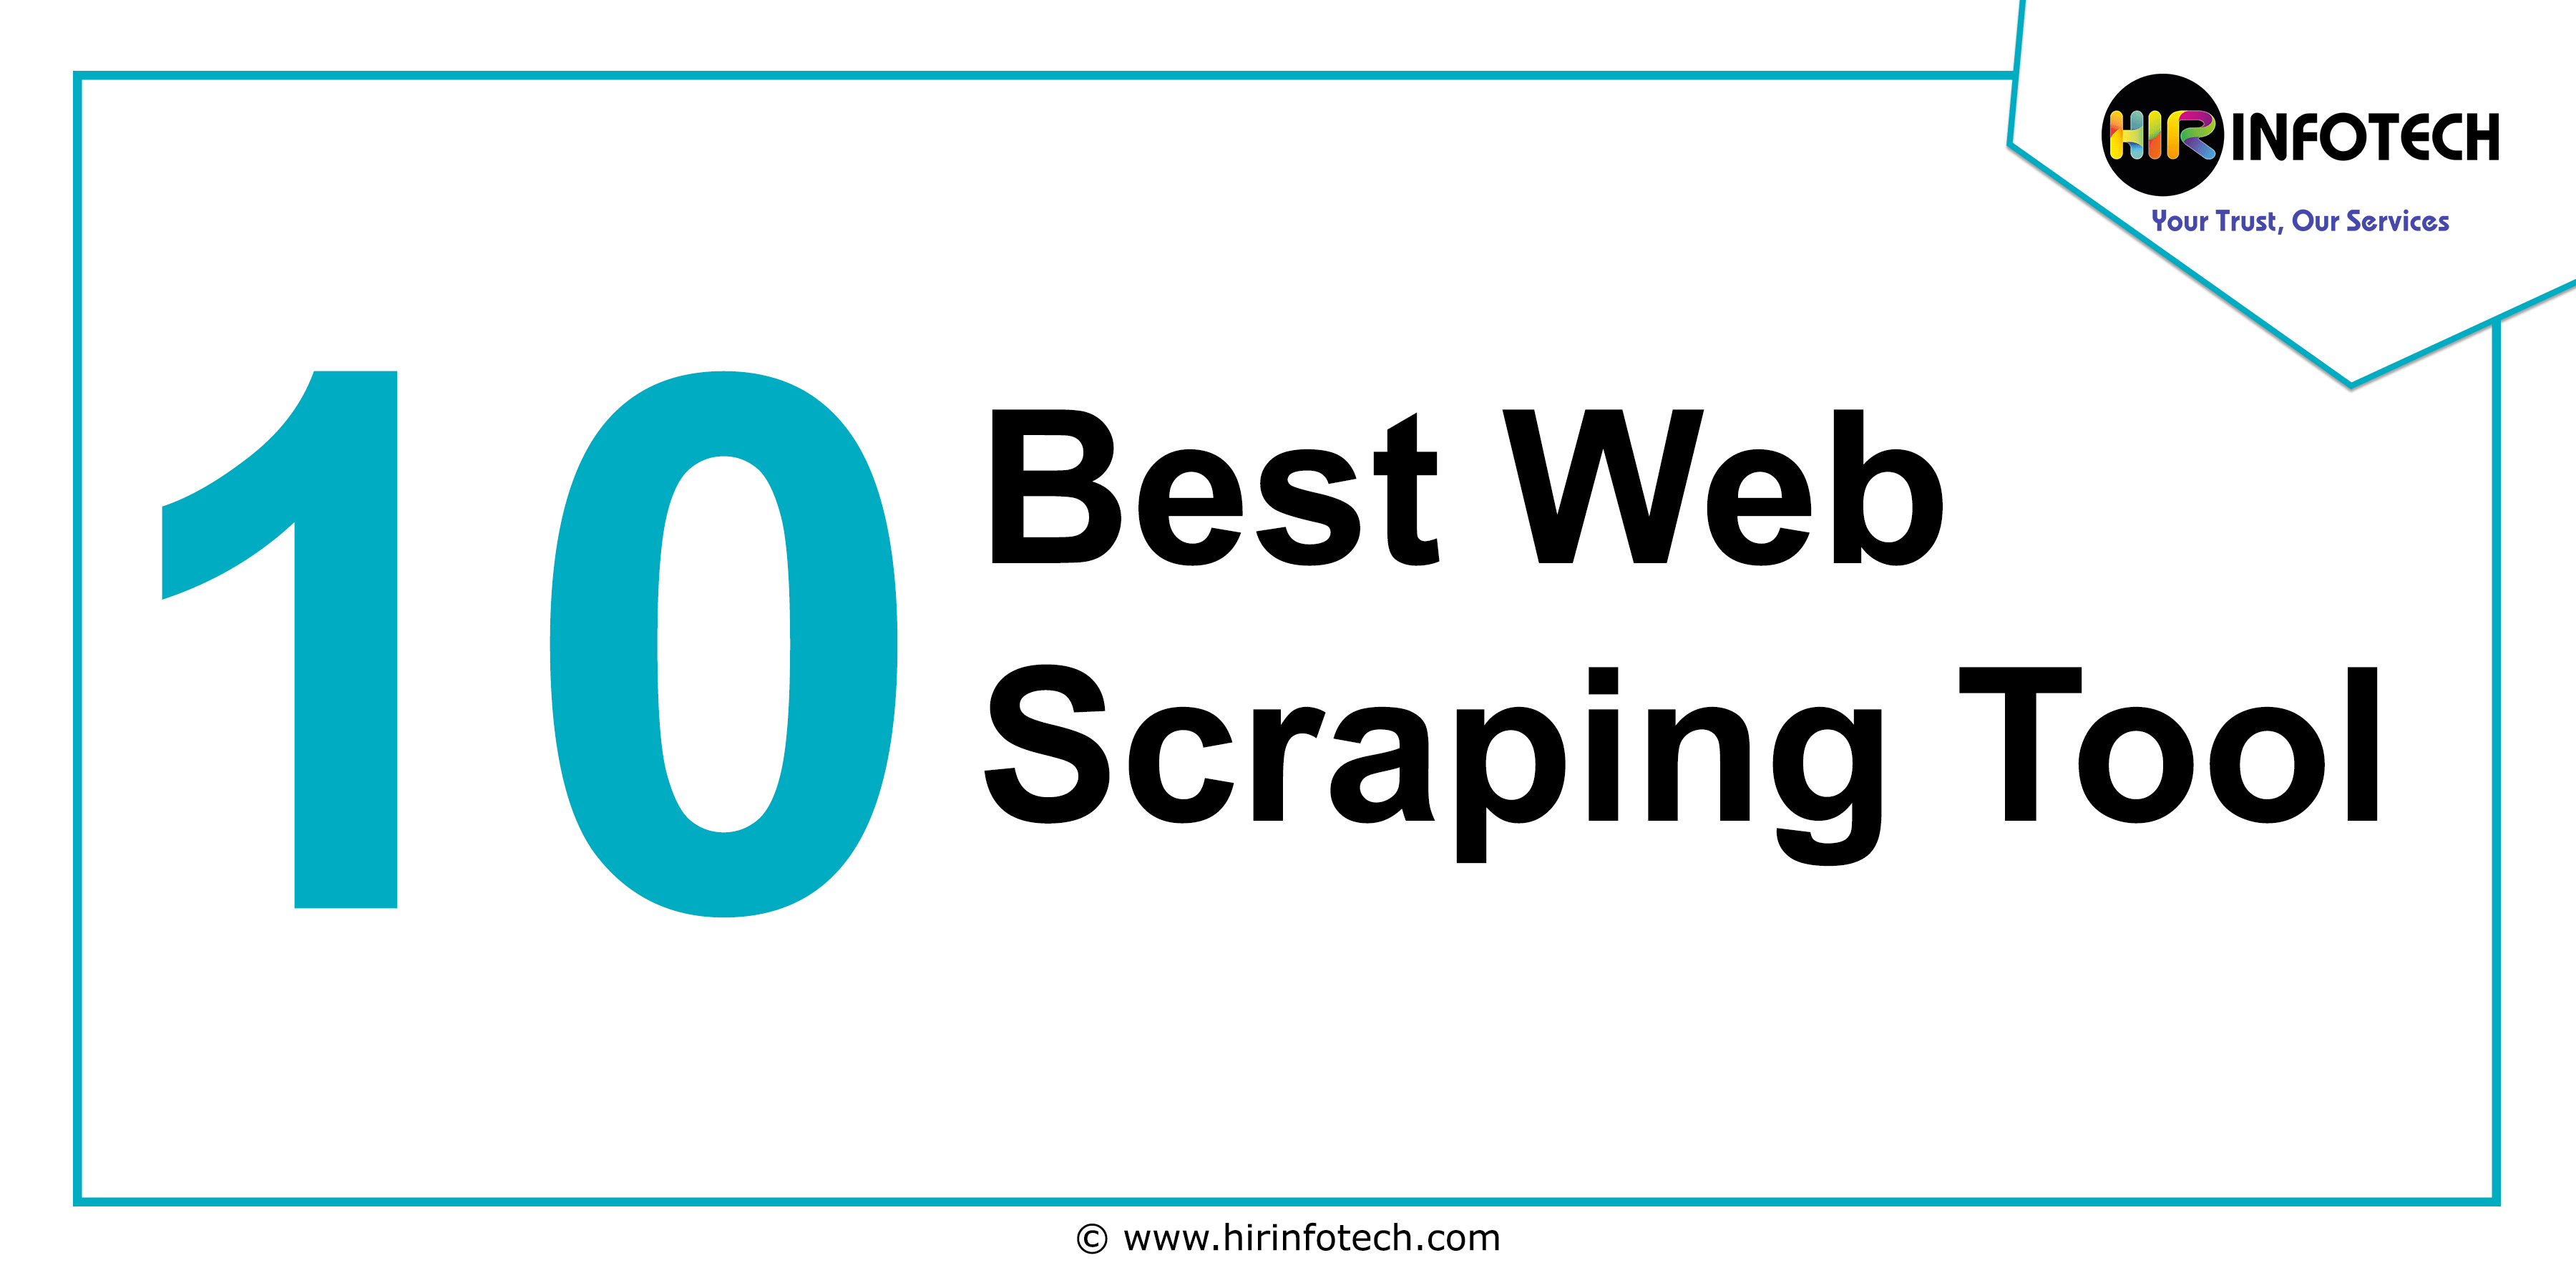 Best Web Scraping Tools